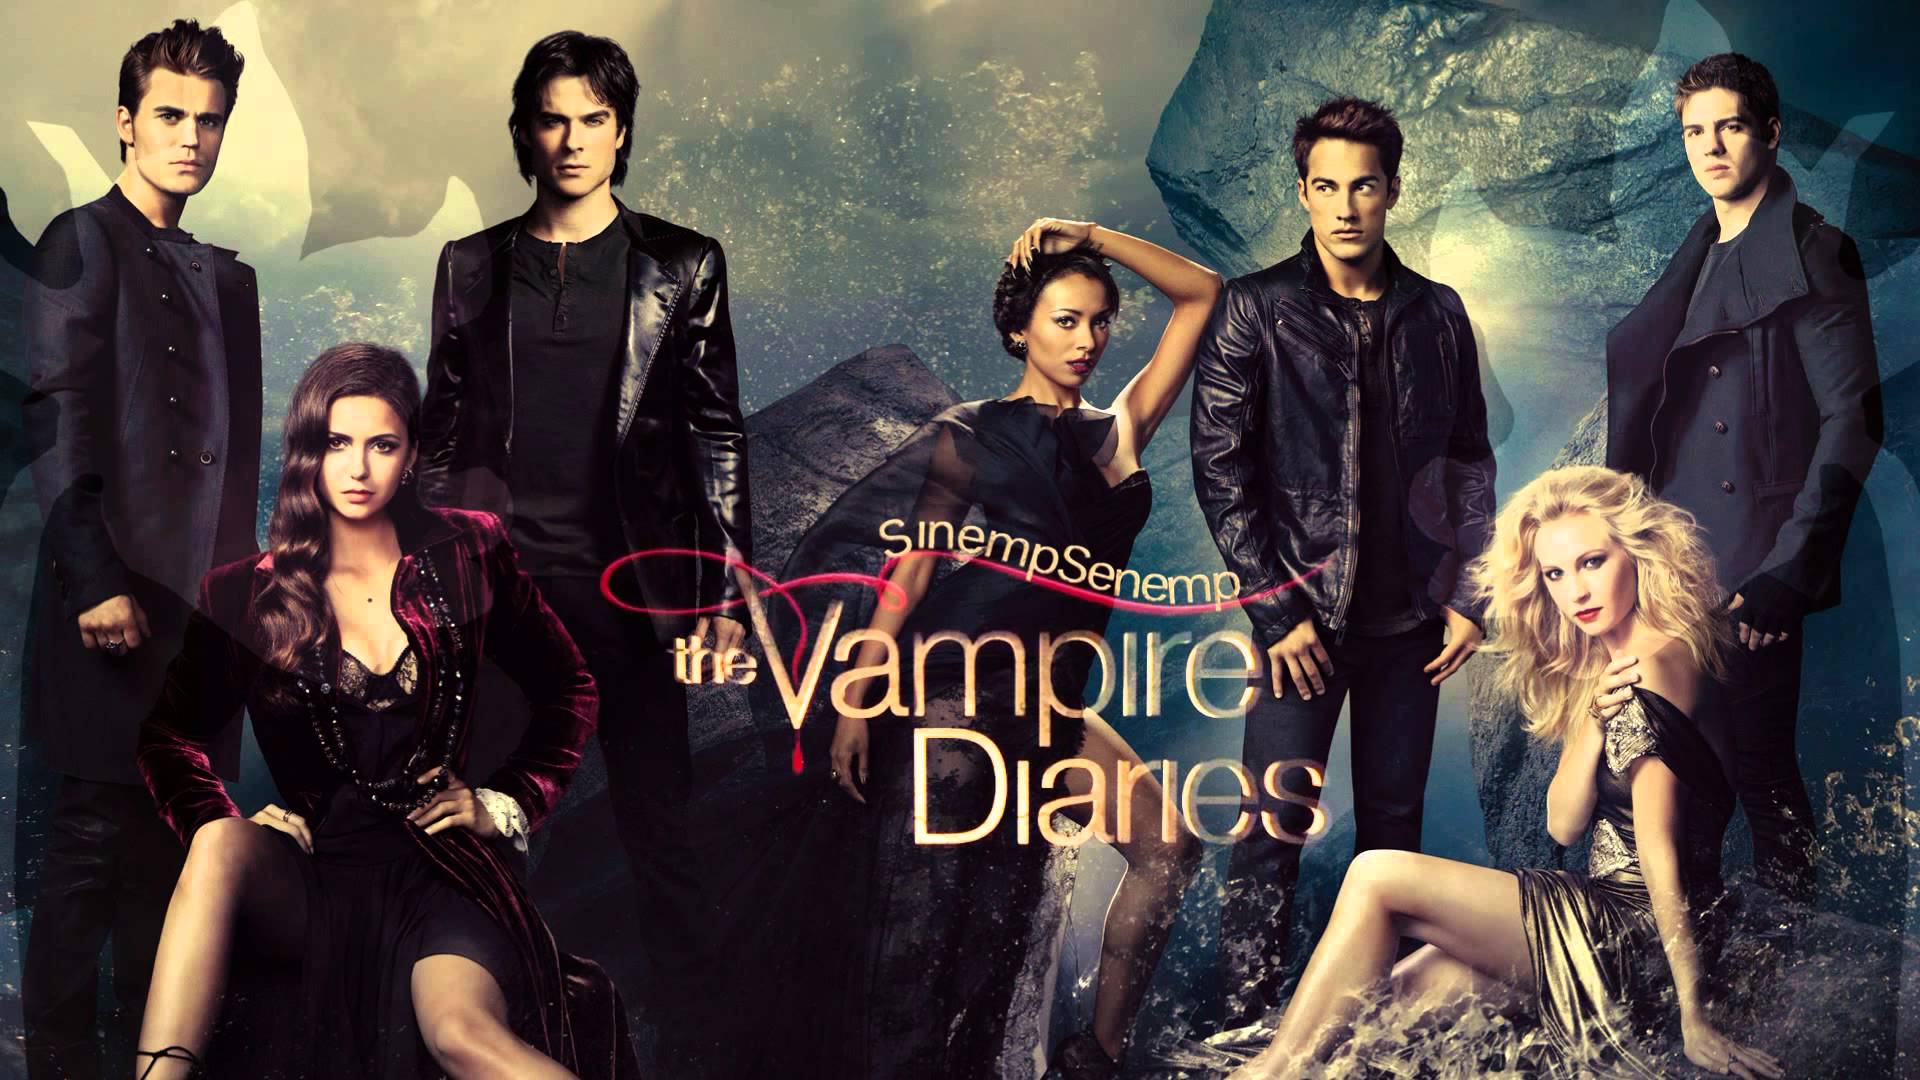 Vampire Diaries Season 6 Episode 6 Spoilers The More You Ignore Me